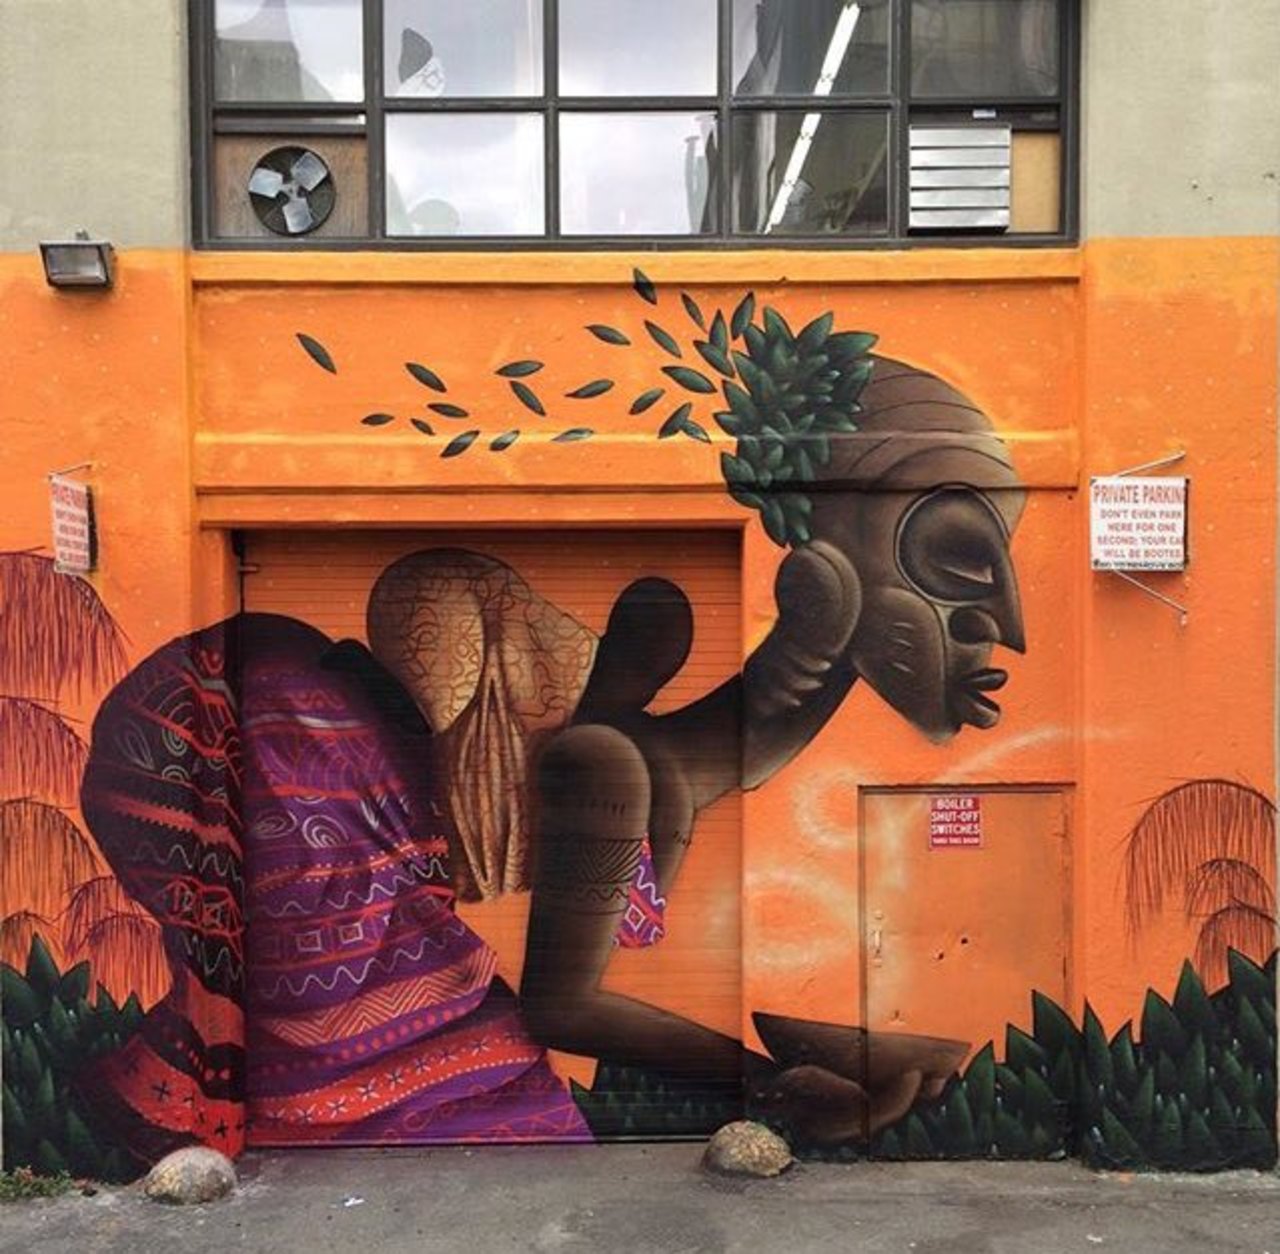 RT @tobizinhu307: New Street Art by Alexandre Keto in NYC 

#art #graffiti #mural #streetart https://t.co/3IdnKf8h1v